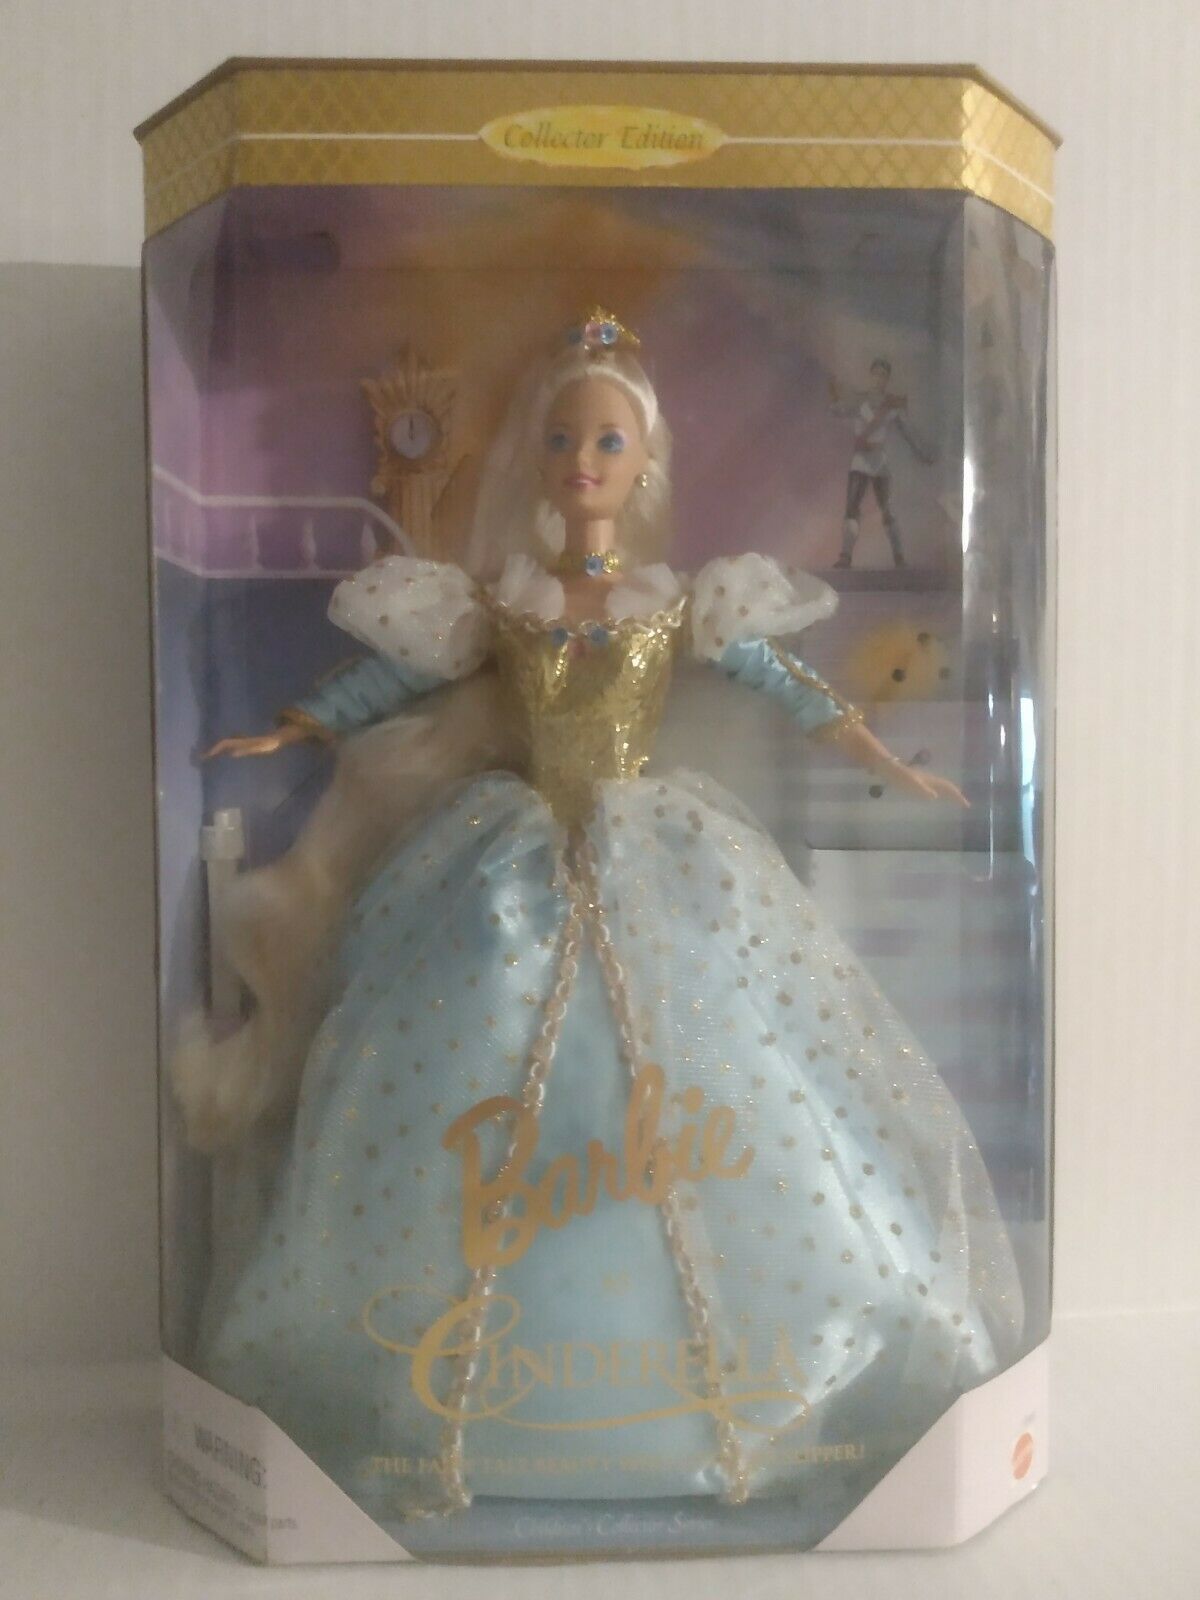 1996 Cinderella Barbie Doll  Collector Series Edition Mattel 16900